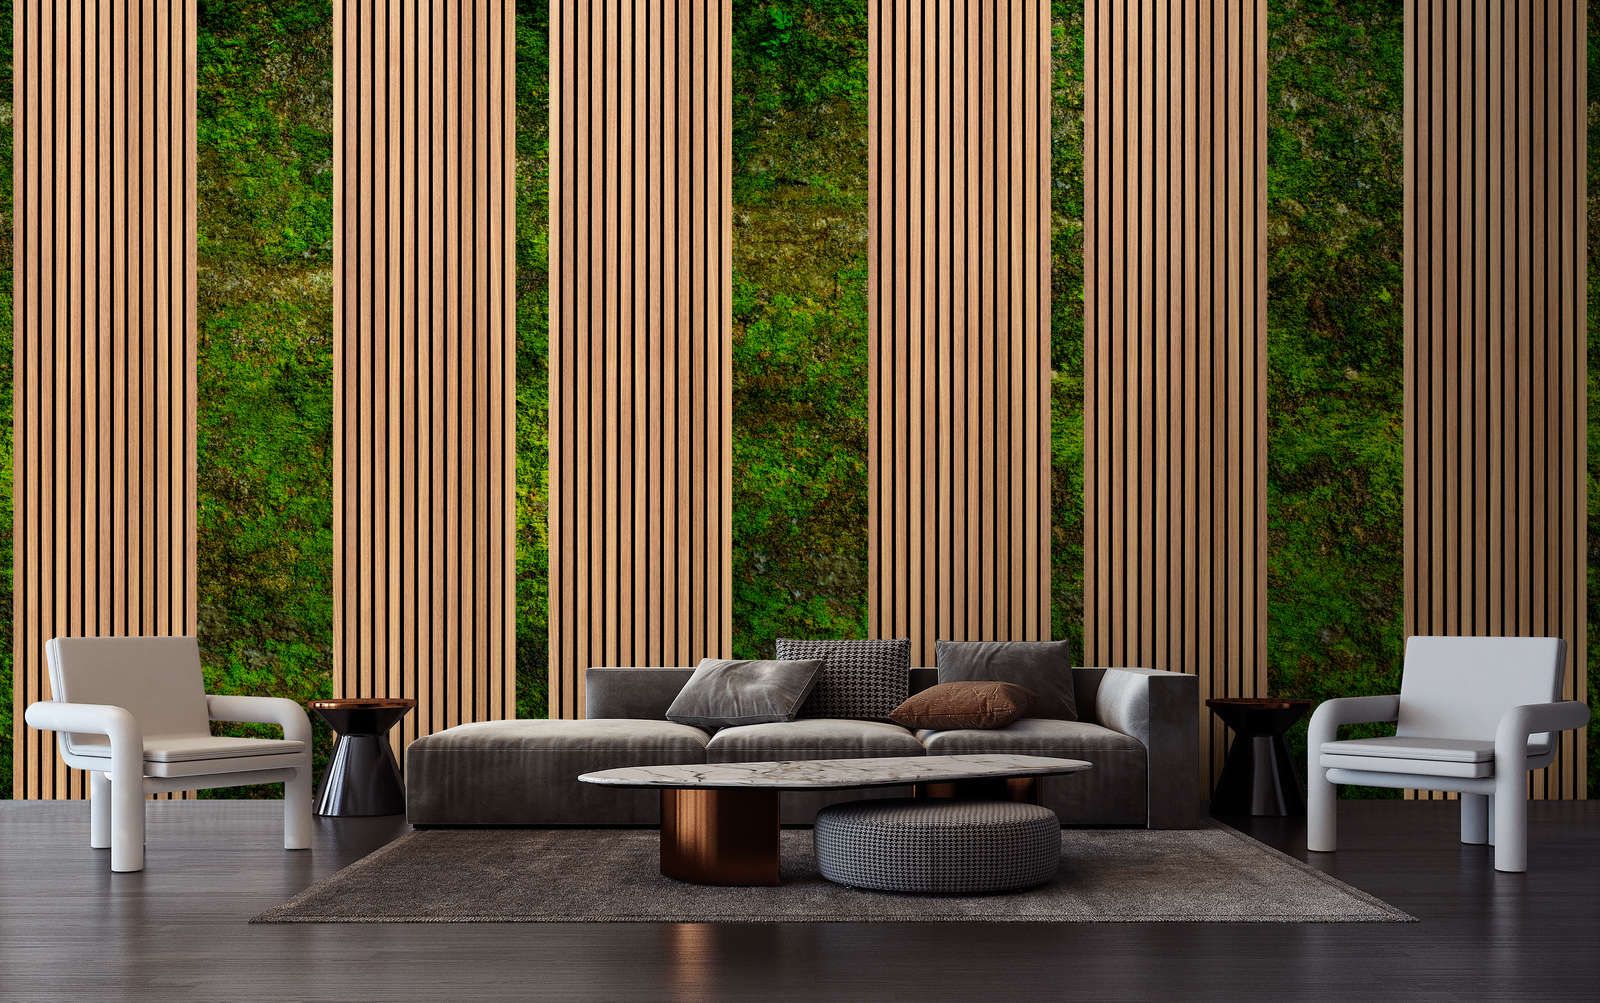             Photo wallpaper »panel 1« - Narrow wooden panels & moss - Lightly textured non-woven fabric
        